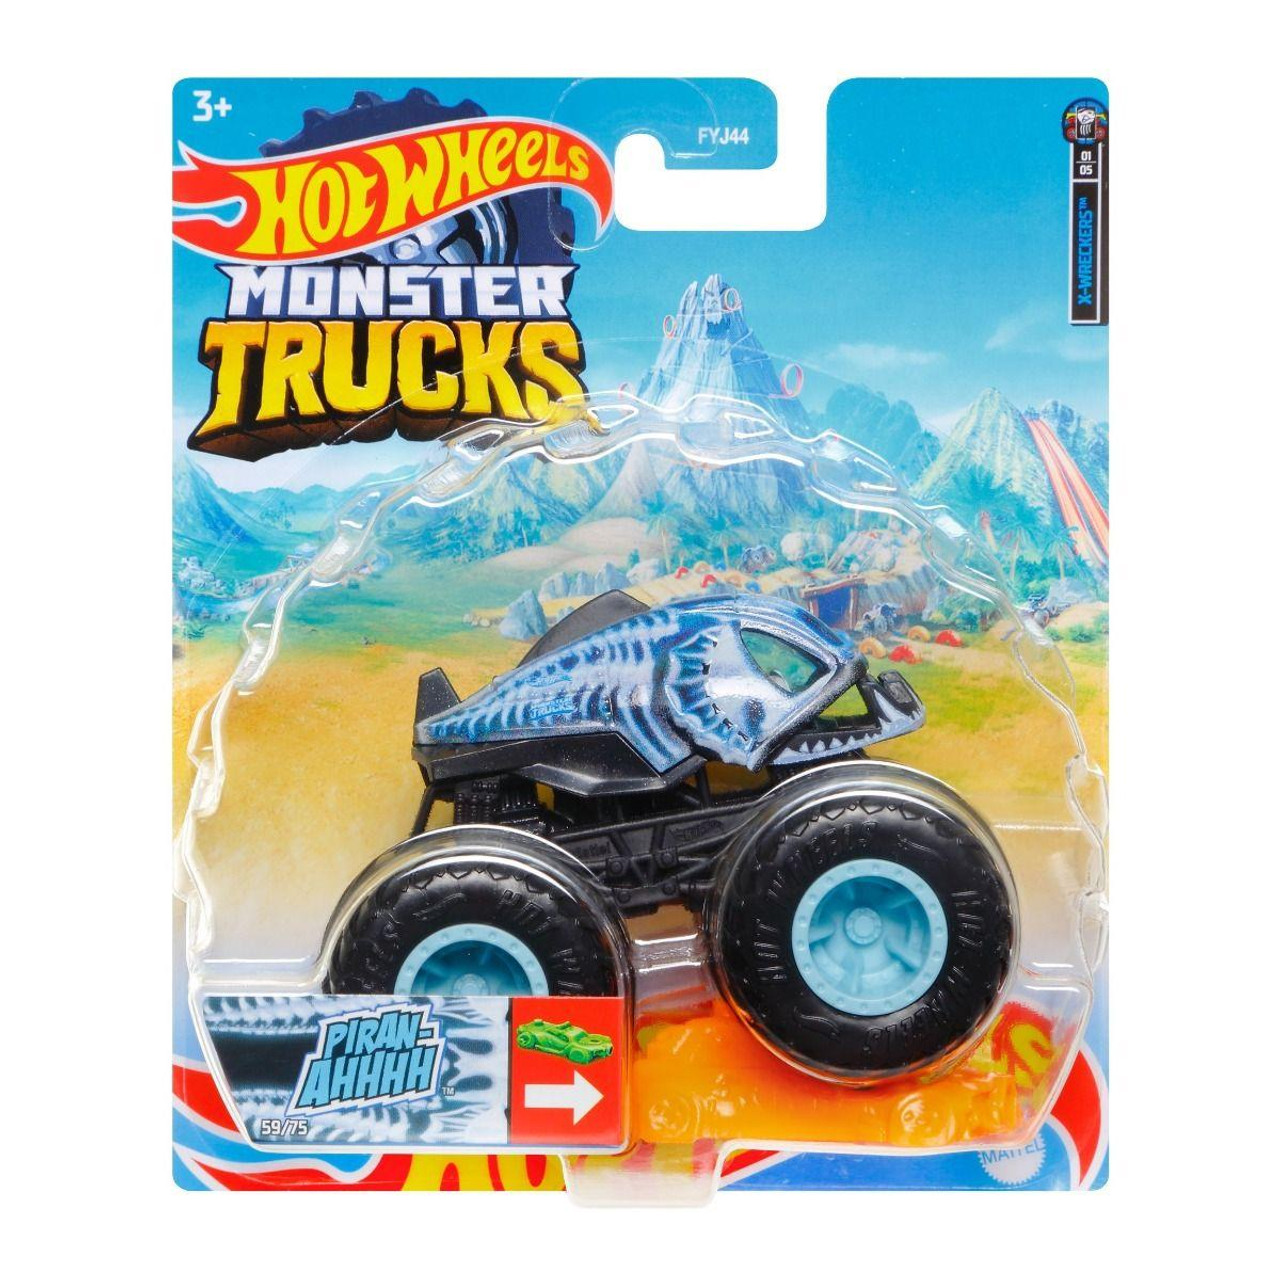 Hot Wheels Monster Trucks Oversized Teenage Mutant Ninja Turtles